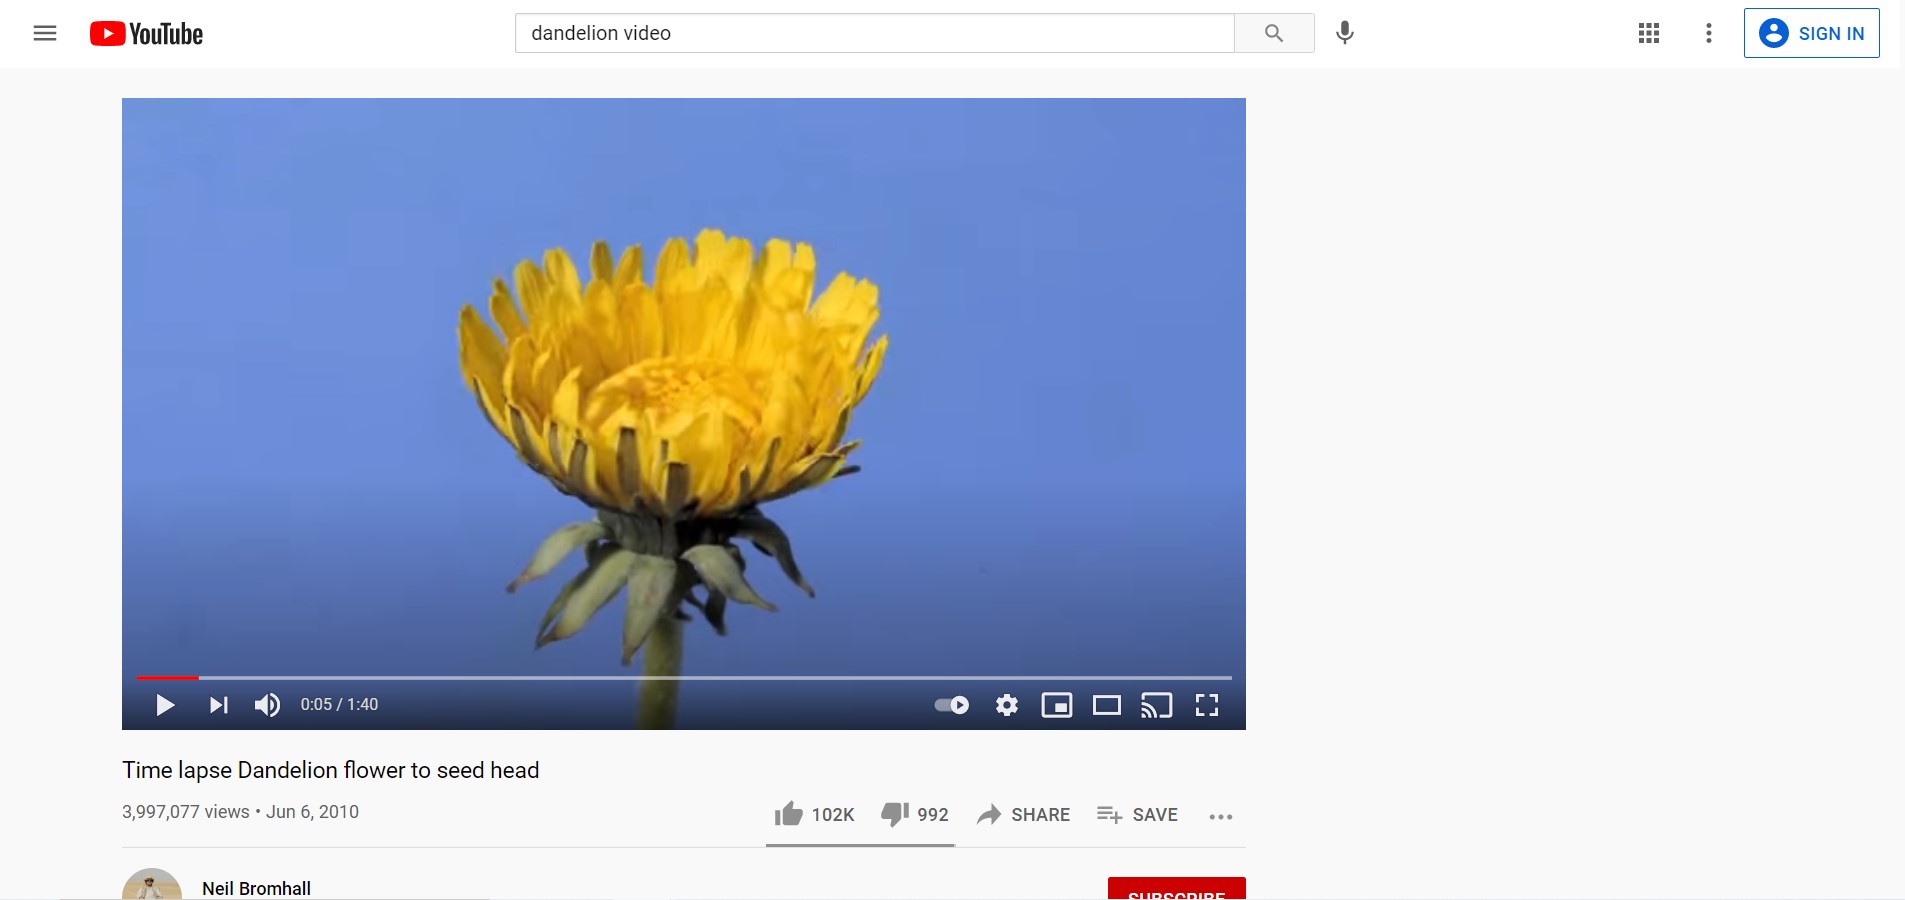 dandelion video on youtube